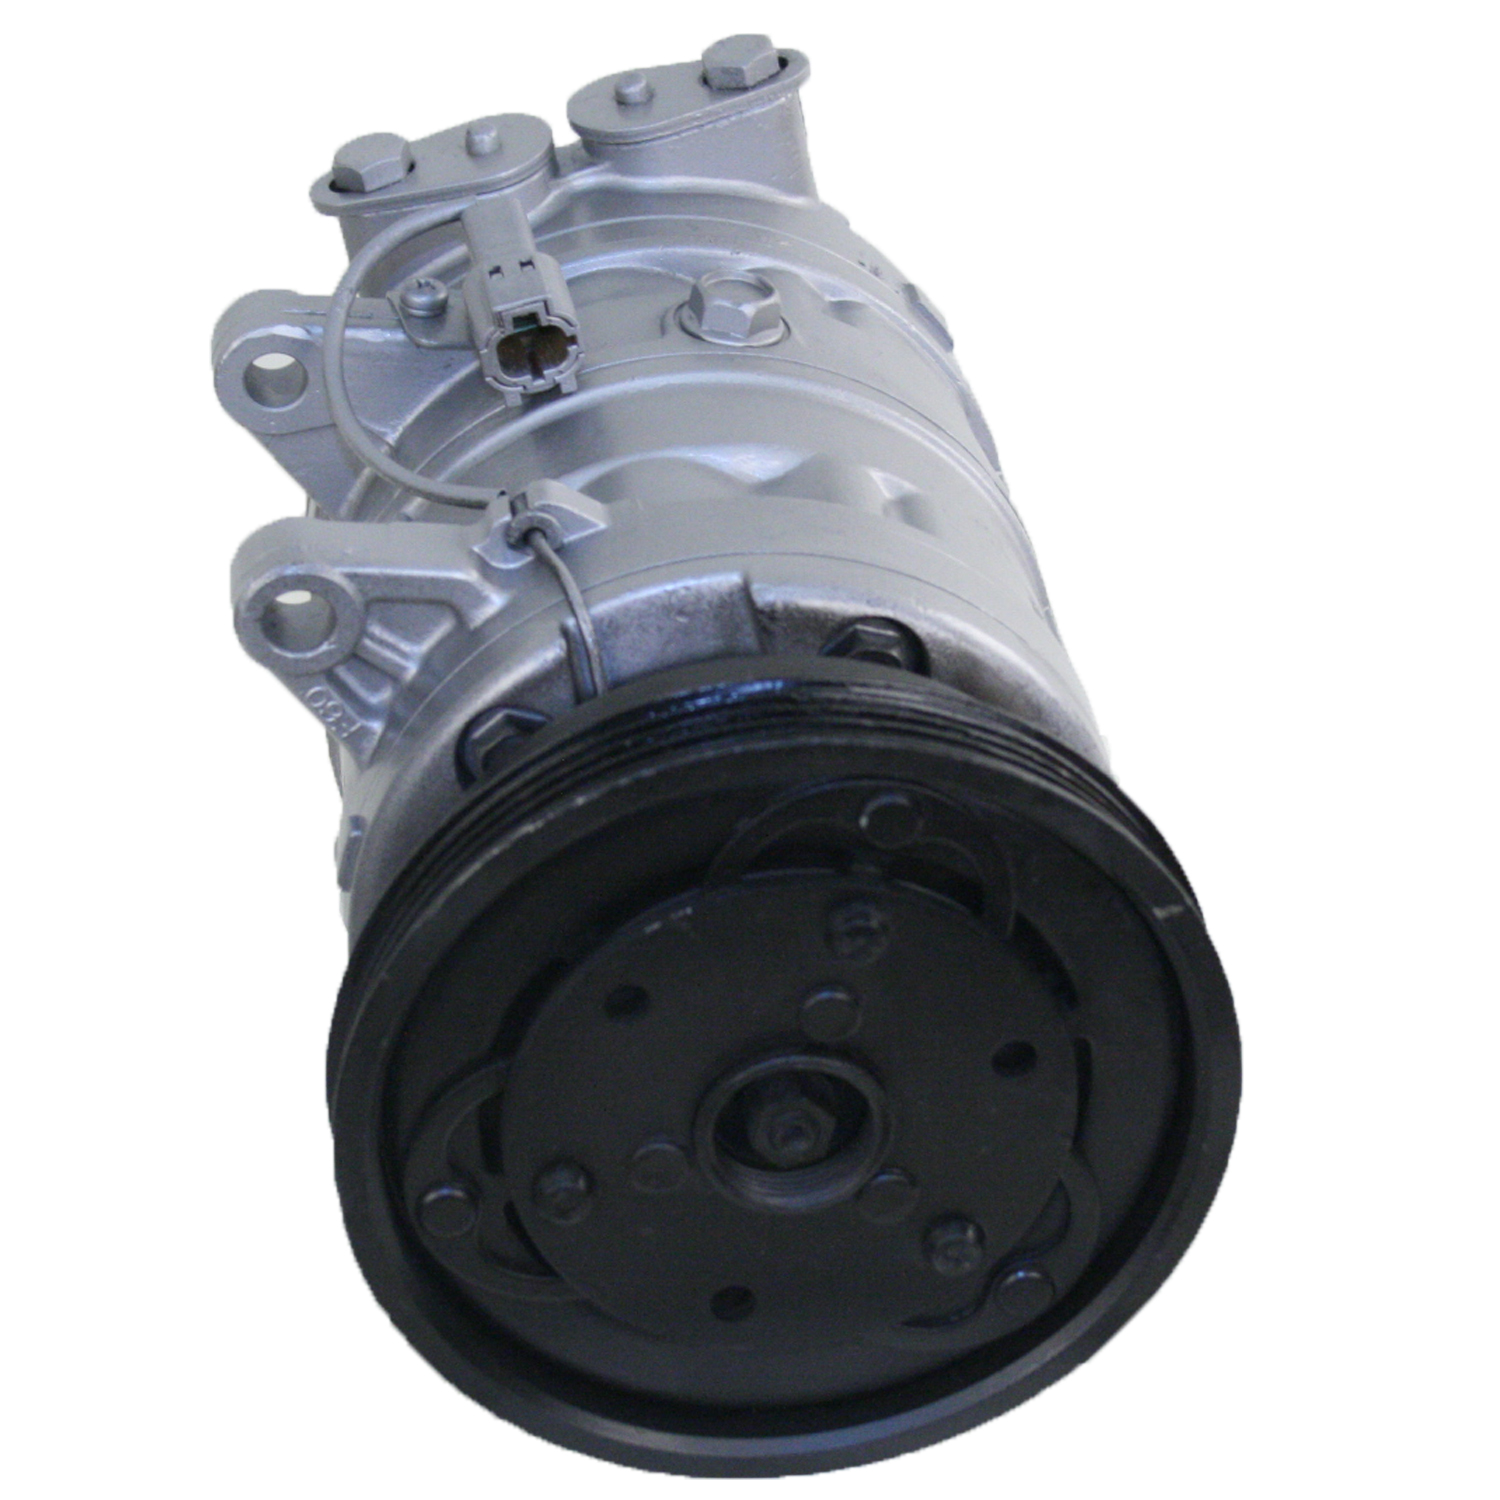 TCW Compressor 12450.401 Remanufactured Product Image field_60b6a13a6e67c